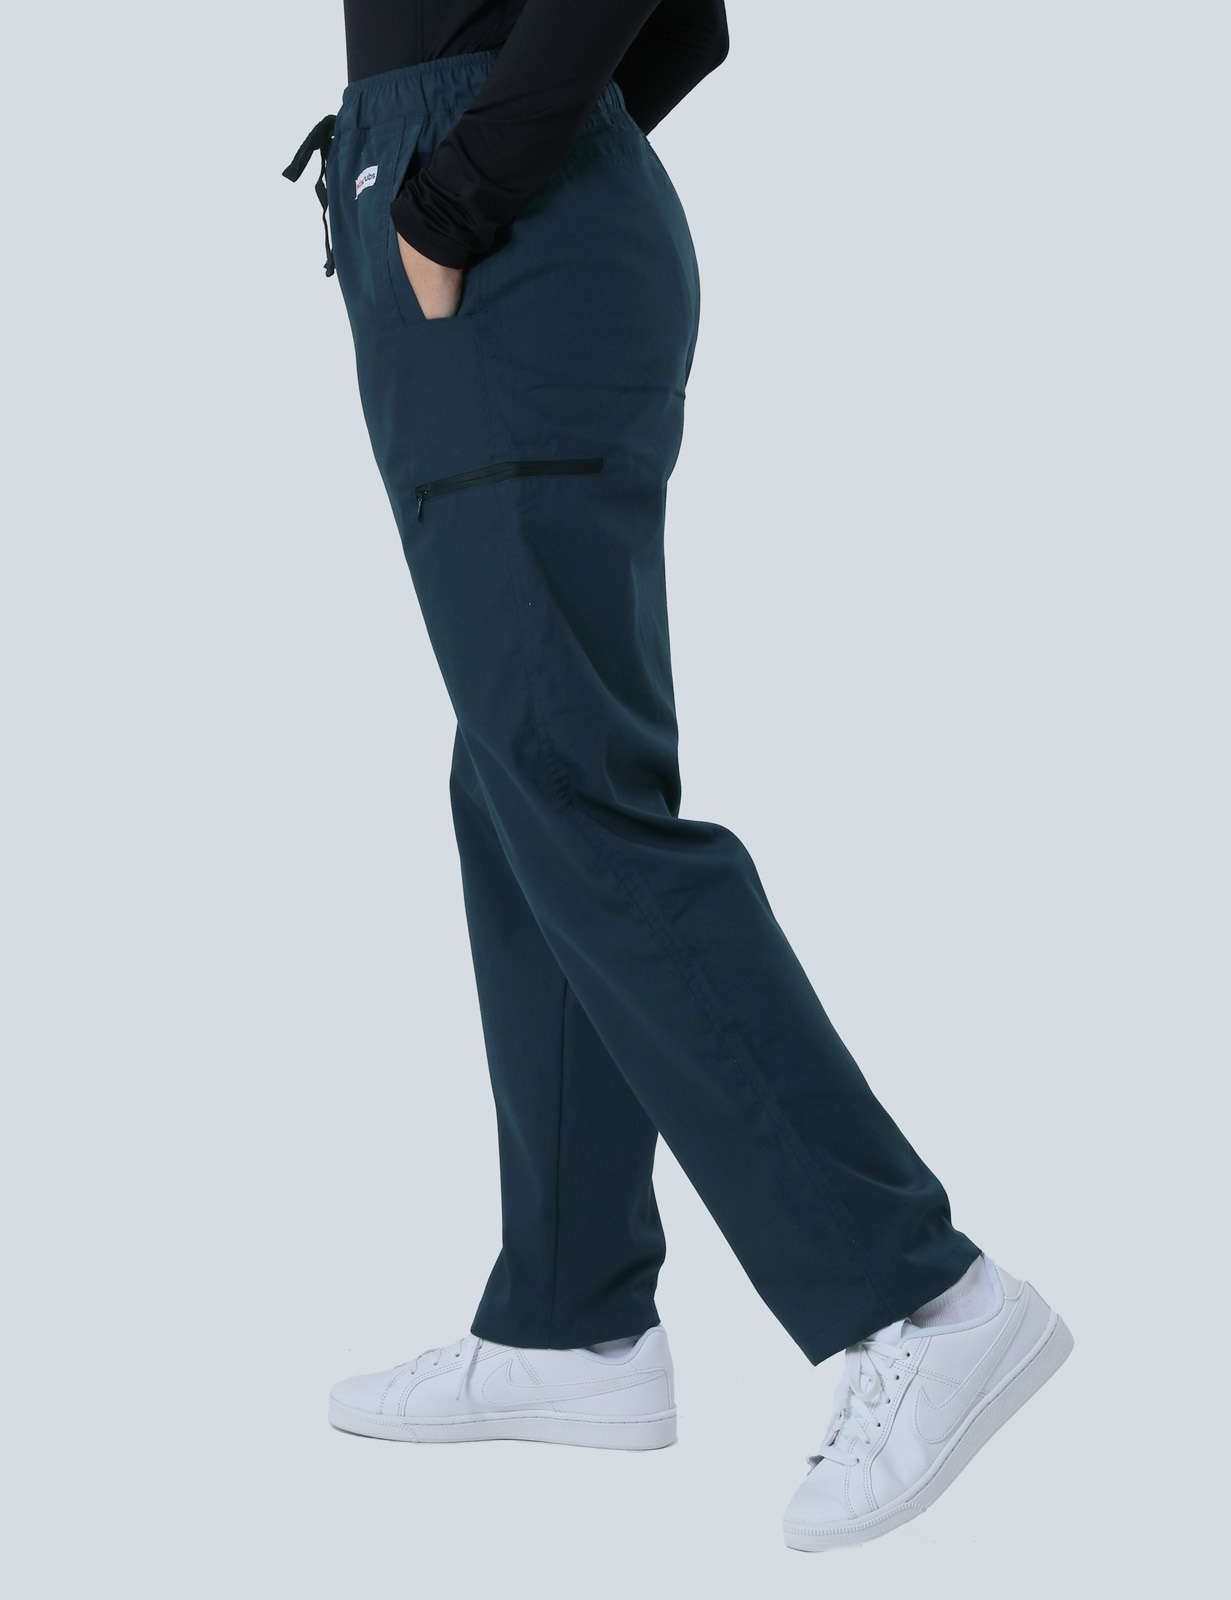 Women's Utility Pants - Navy - 5x Large